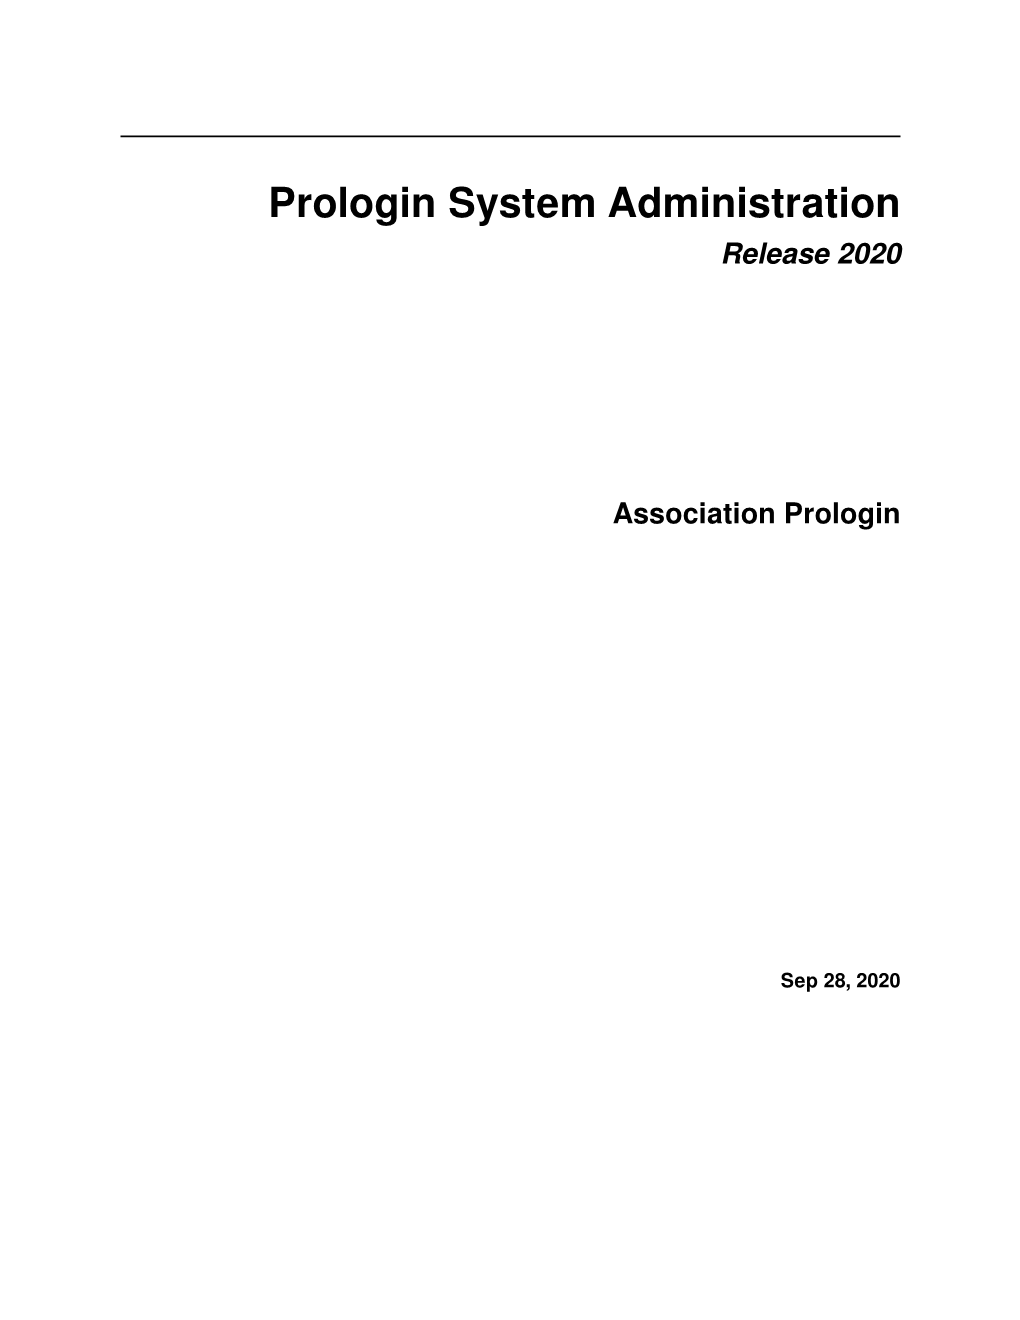 Prologin System Administration Release 2020